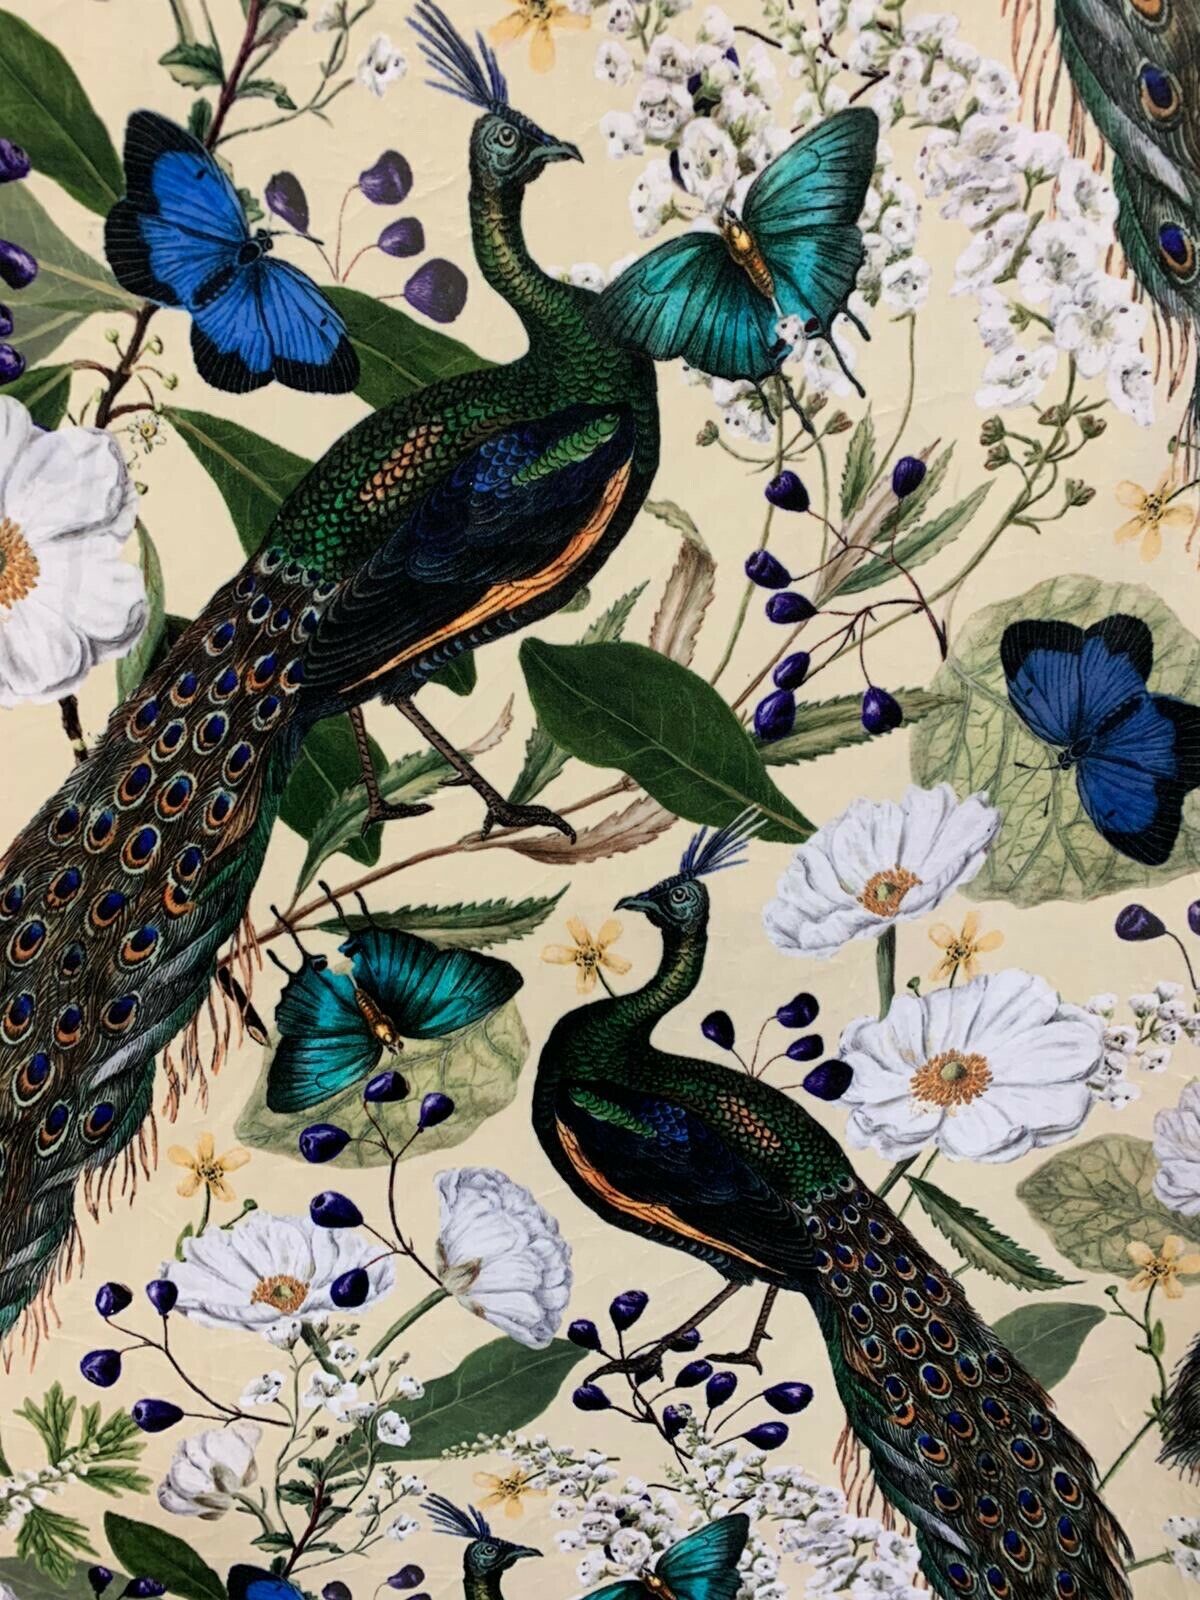 Peacock Light Yellow Velvet Butterflies Birds Pattern Sewing Material Botanical Textile Floral Italian